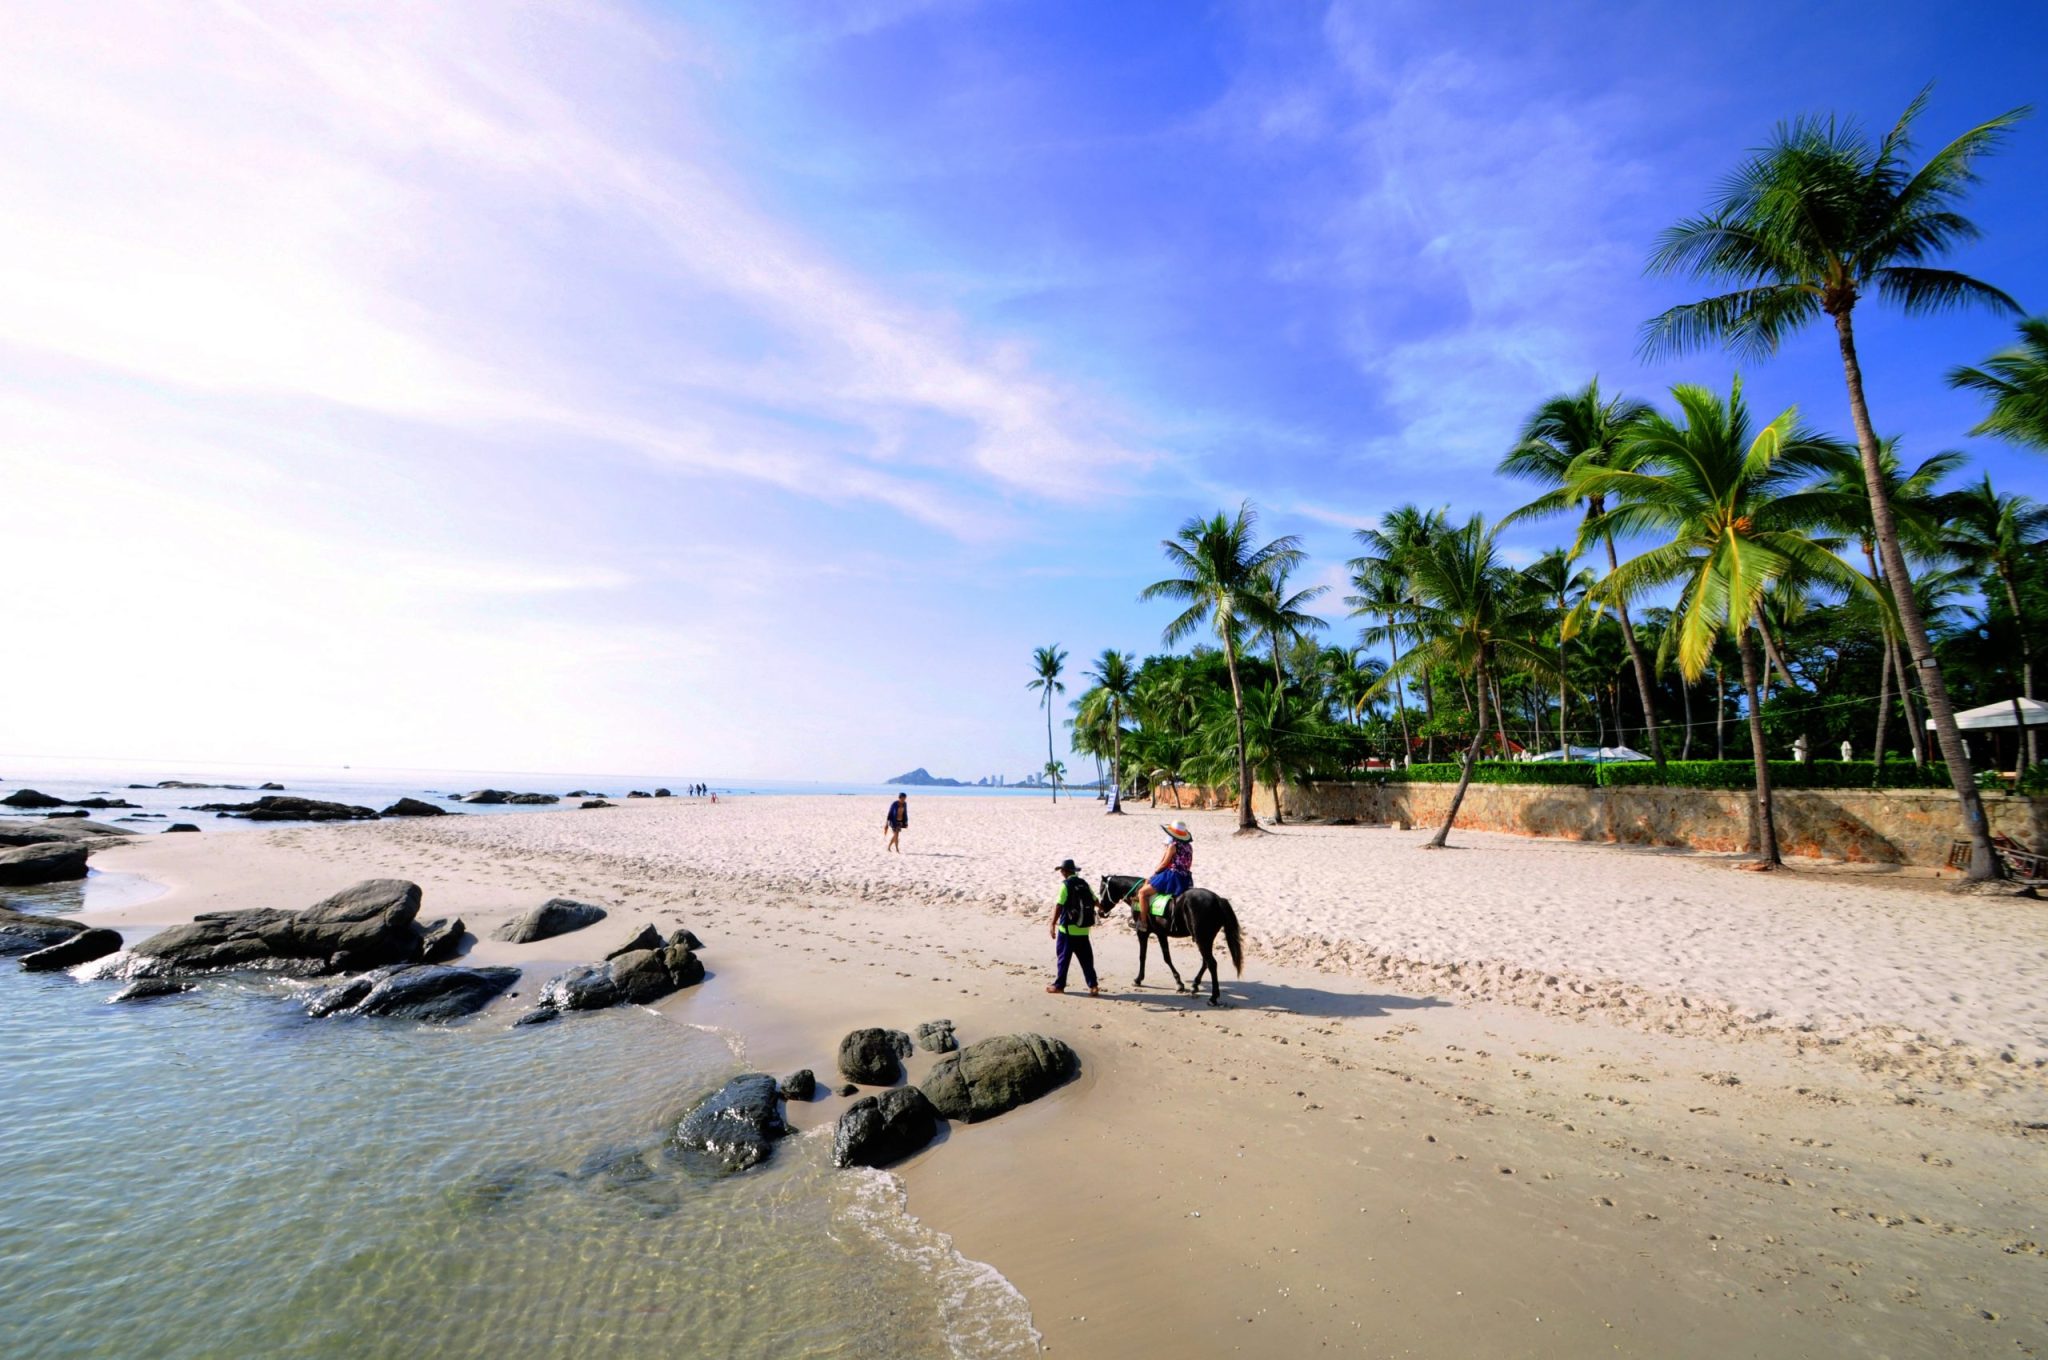 A holiday-goer enjoys a horseback ride along Hua Hin beach.